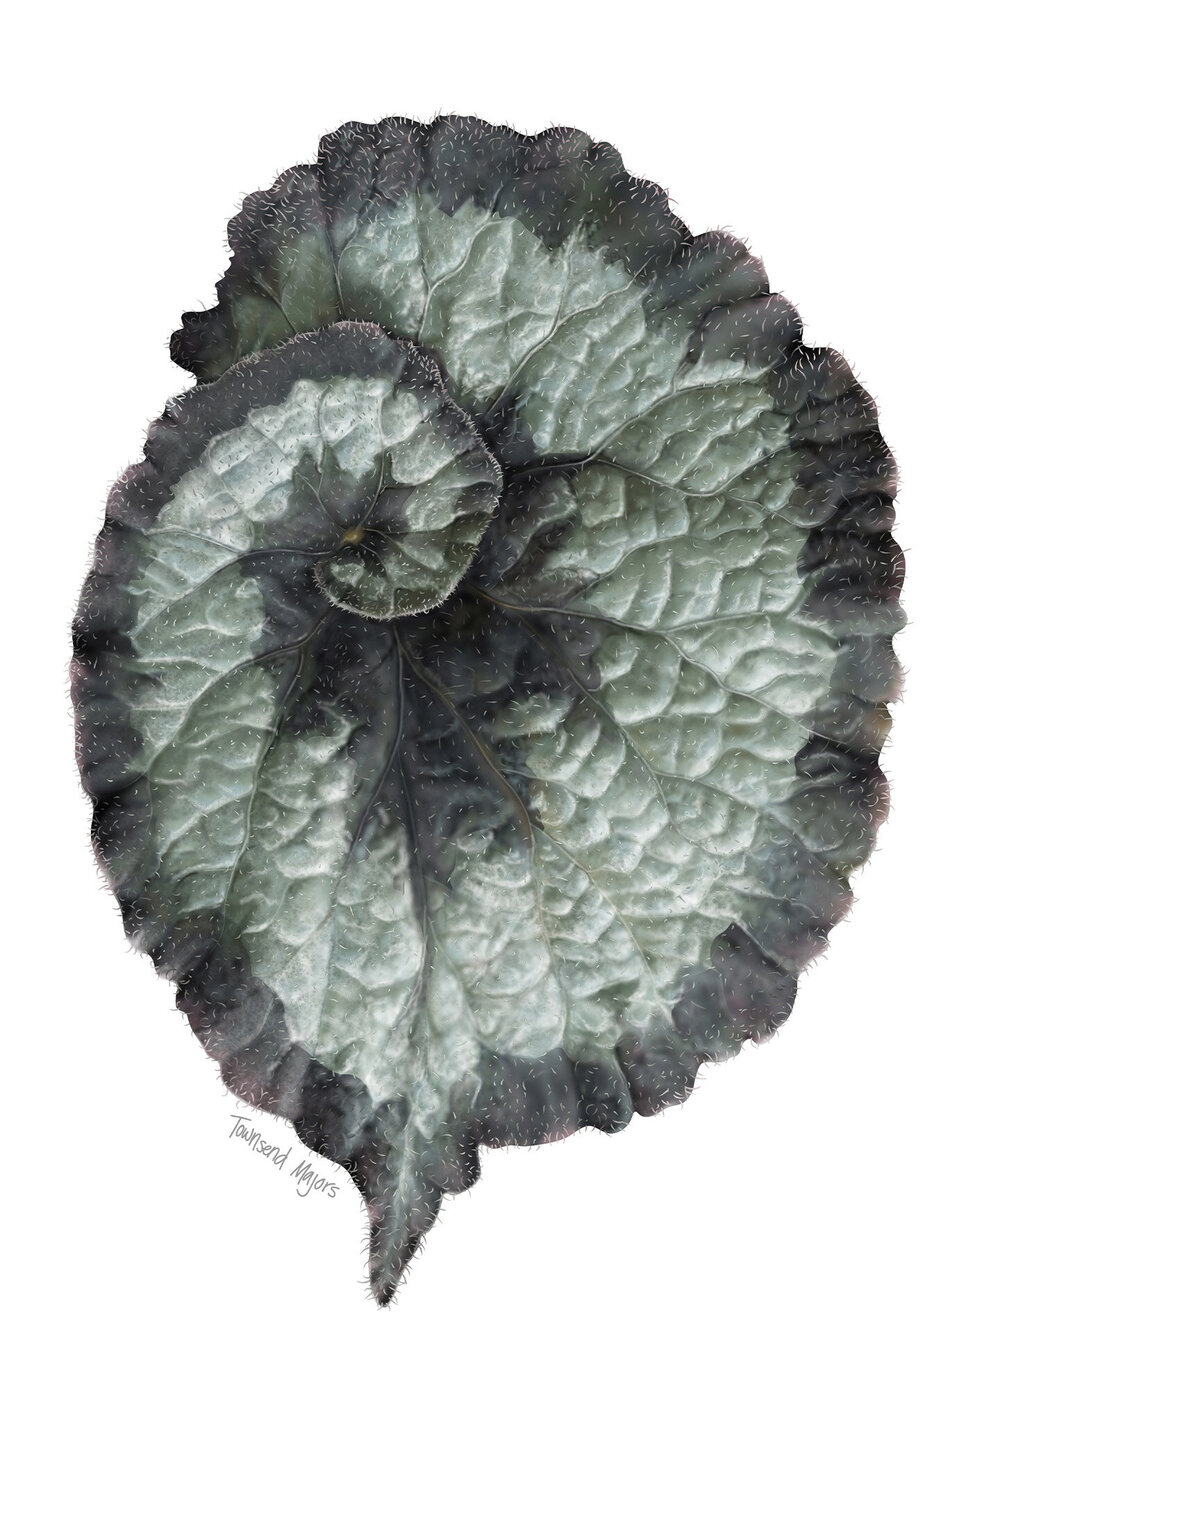 Townsend Majors' illustration of an escargot begonia plant